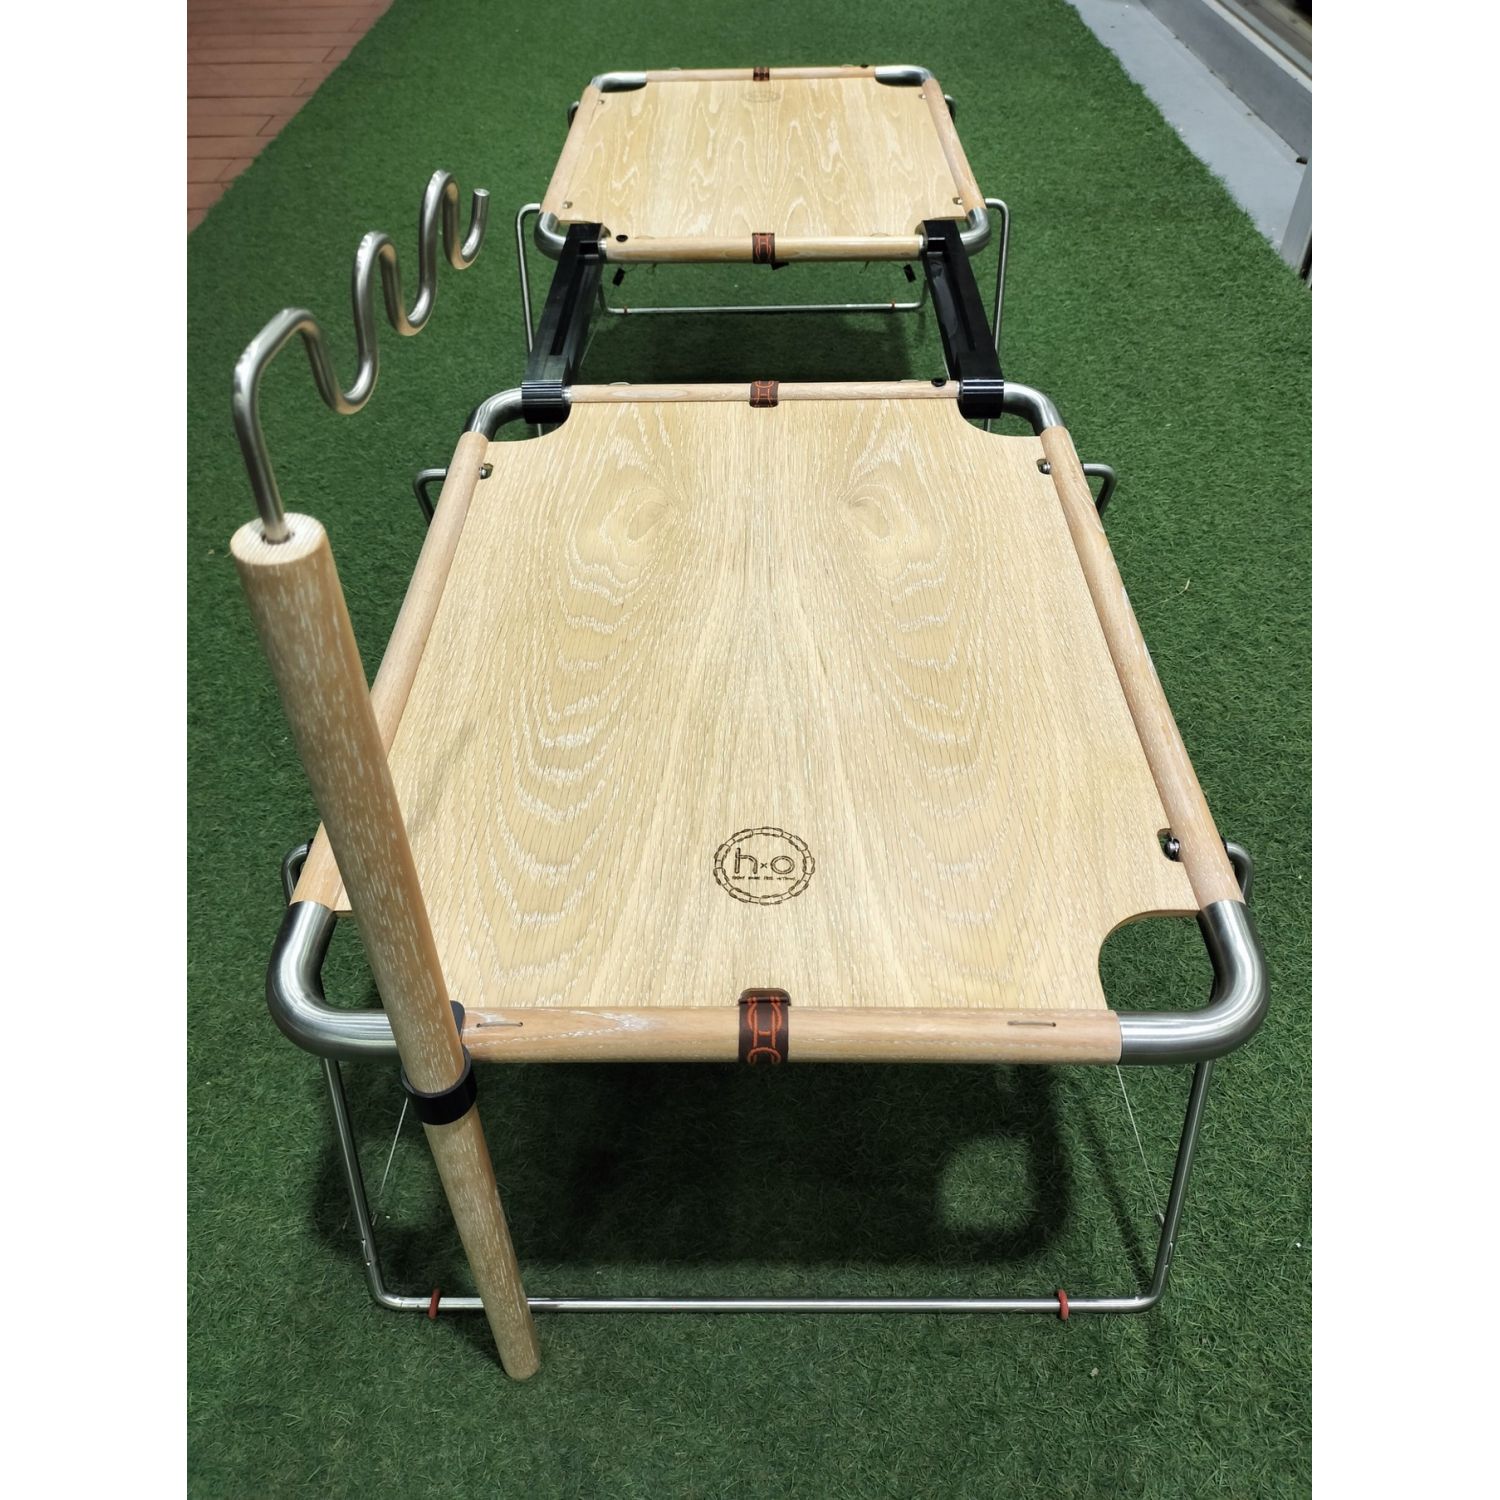 hxo design テーブル&ギアポール&トレー ホワイト Ver.3 新品